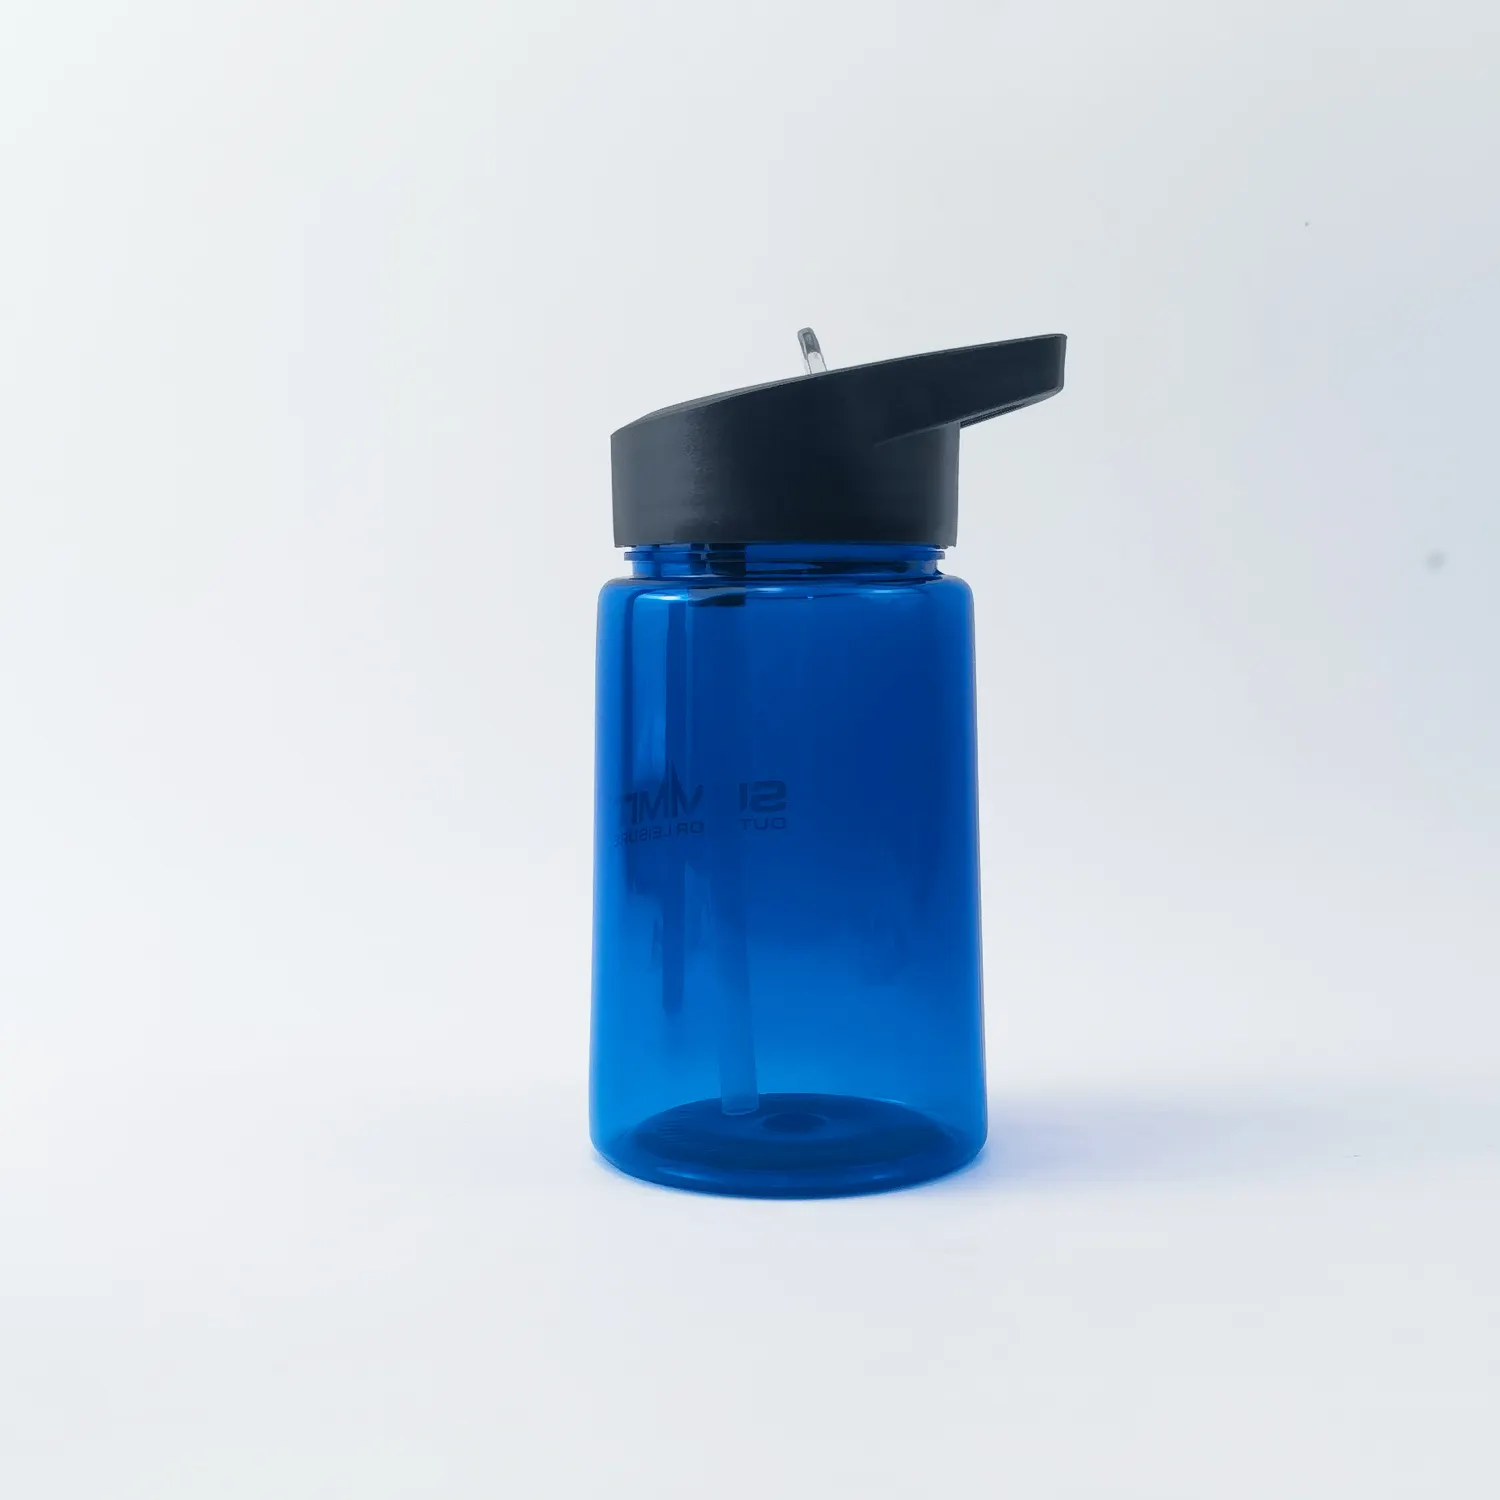 कस्टम BPA फ्री किड्स क्यूट स्पोर्ट्स ड्रिंक प्लास्टिक पानी की बोतल स्ट्रॉ पोर्टेबल क्लियर पानी की बोतल के साथ